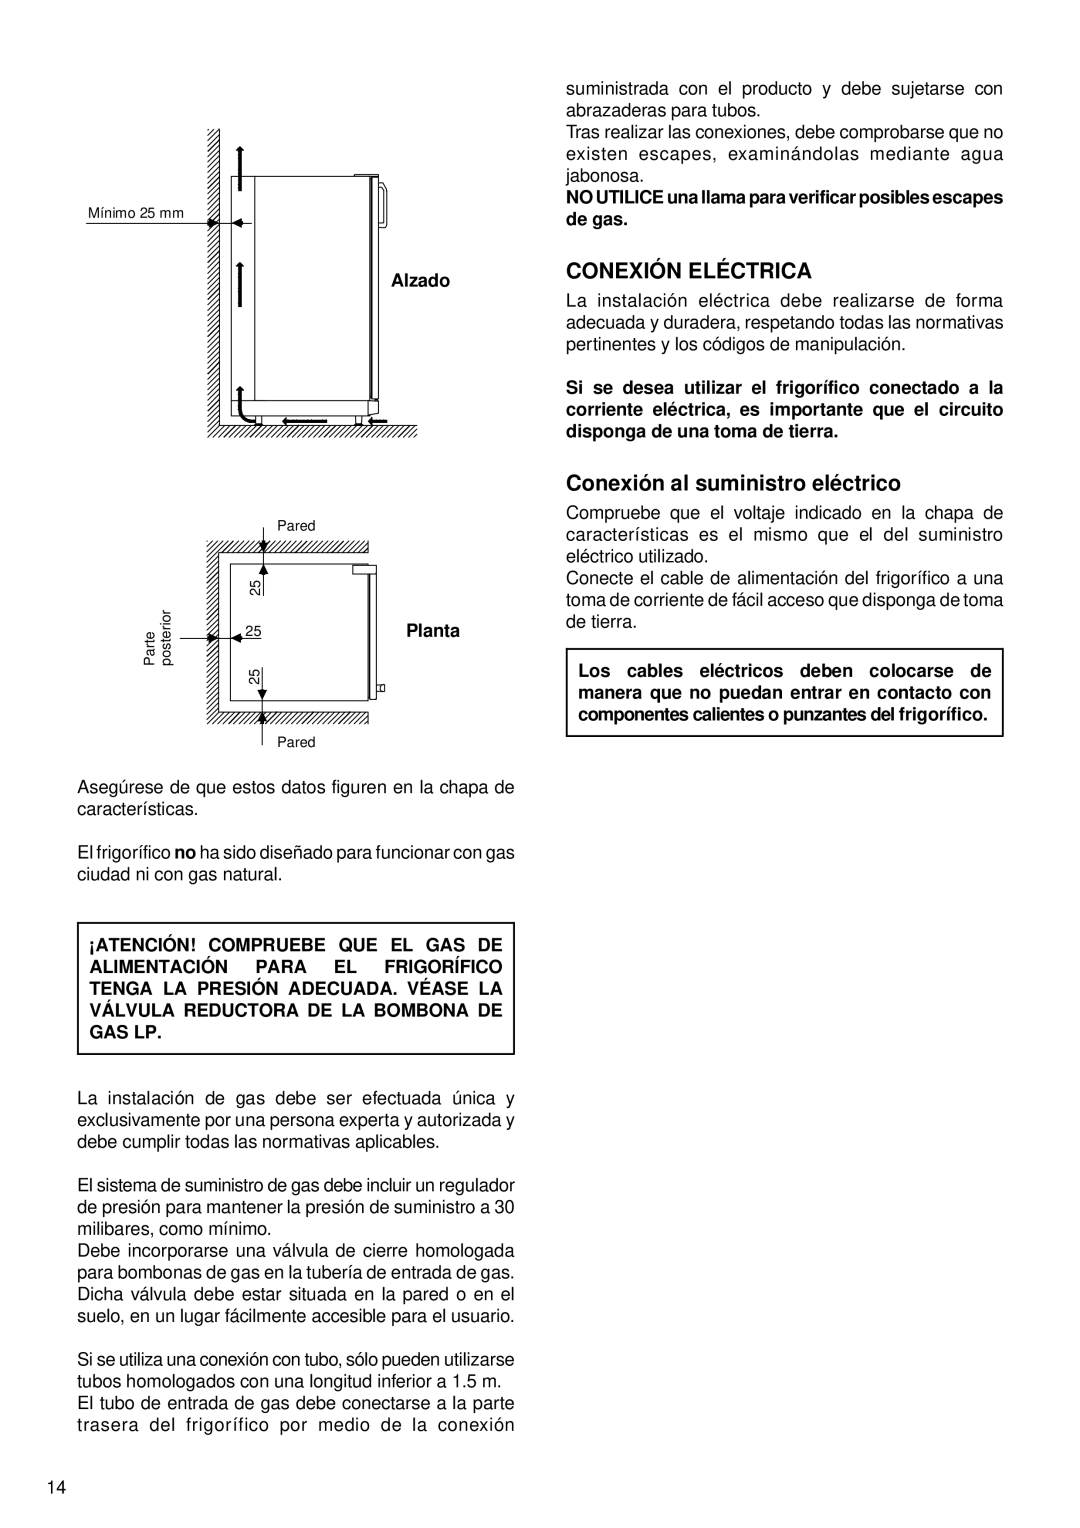 Sibir Optics V 170 GE, V 110 GE manual Conexión Eléctrica, Conexión al suministro eléctrico, Alzado 